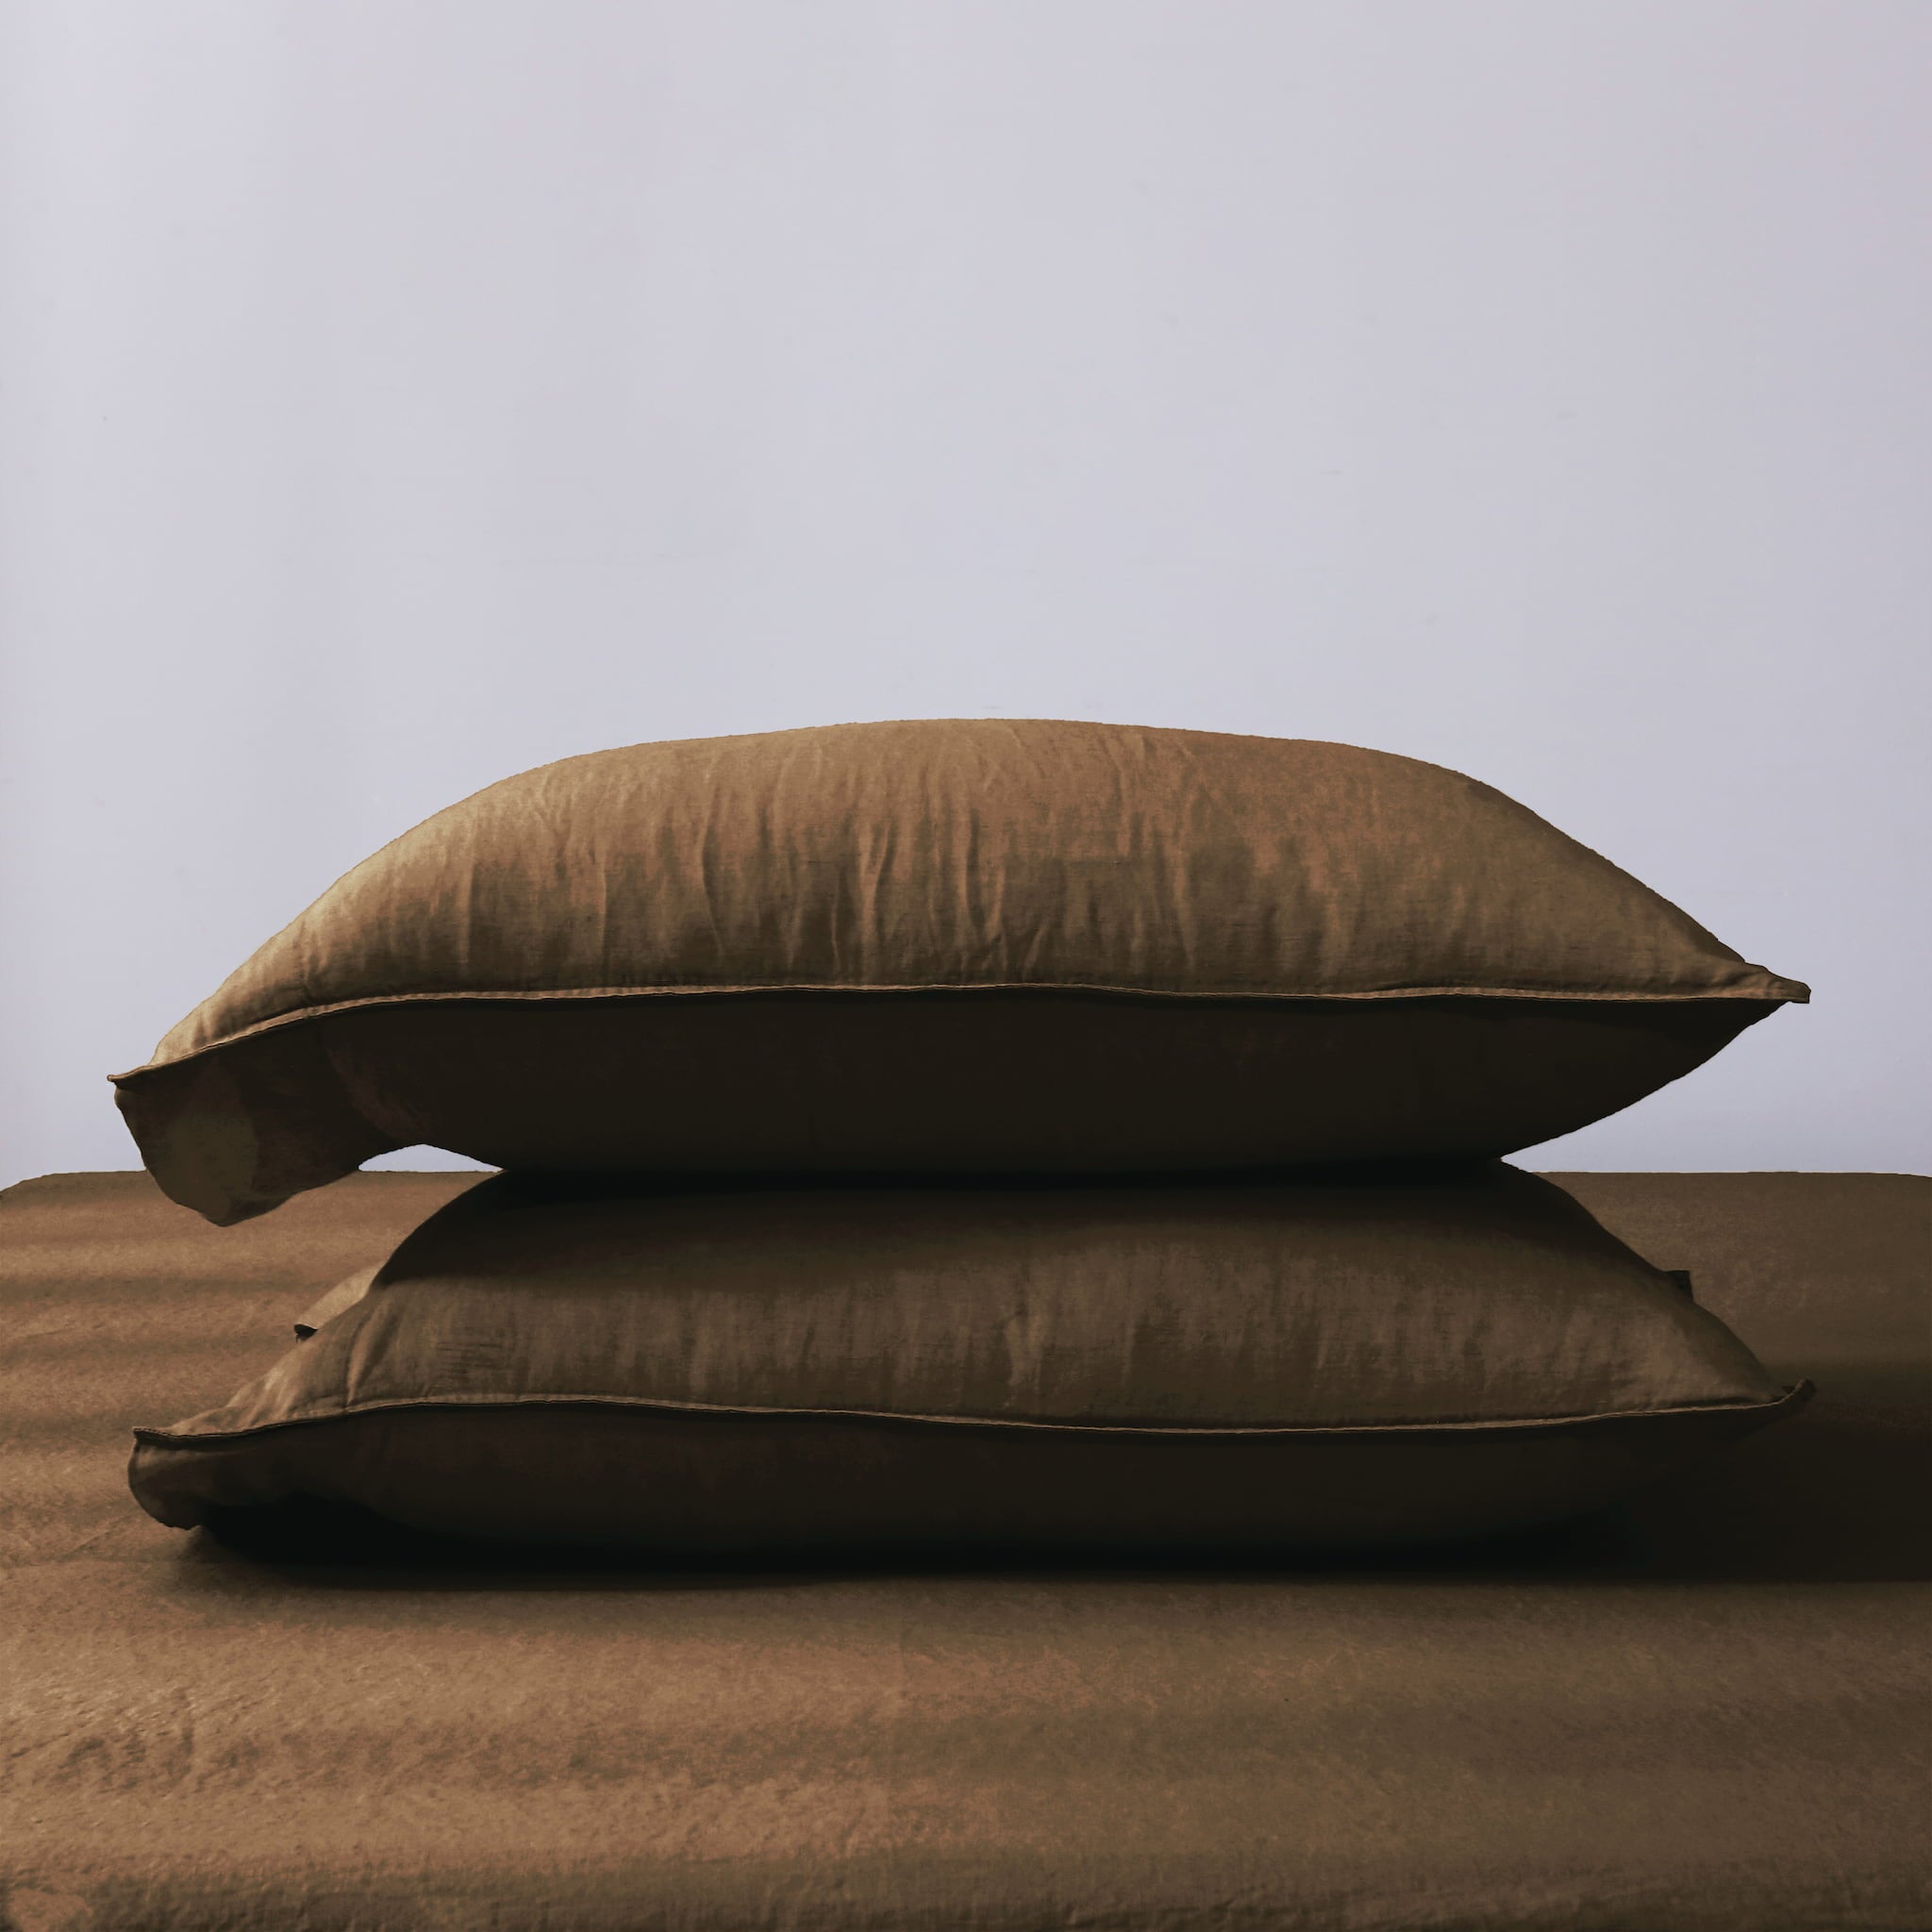 Pinecone Brown Linen Pillowcase Set (Set Of 2) - Linen Time